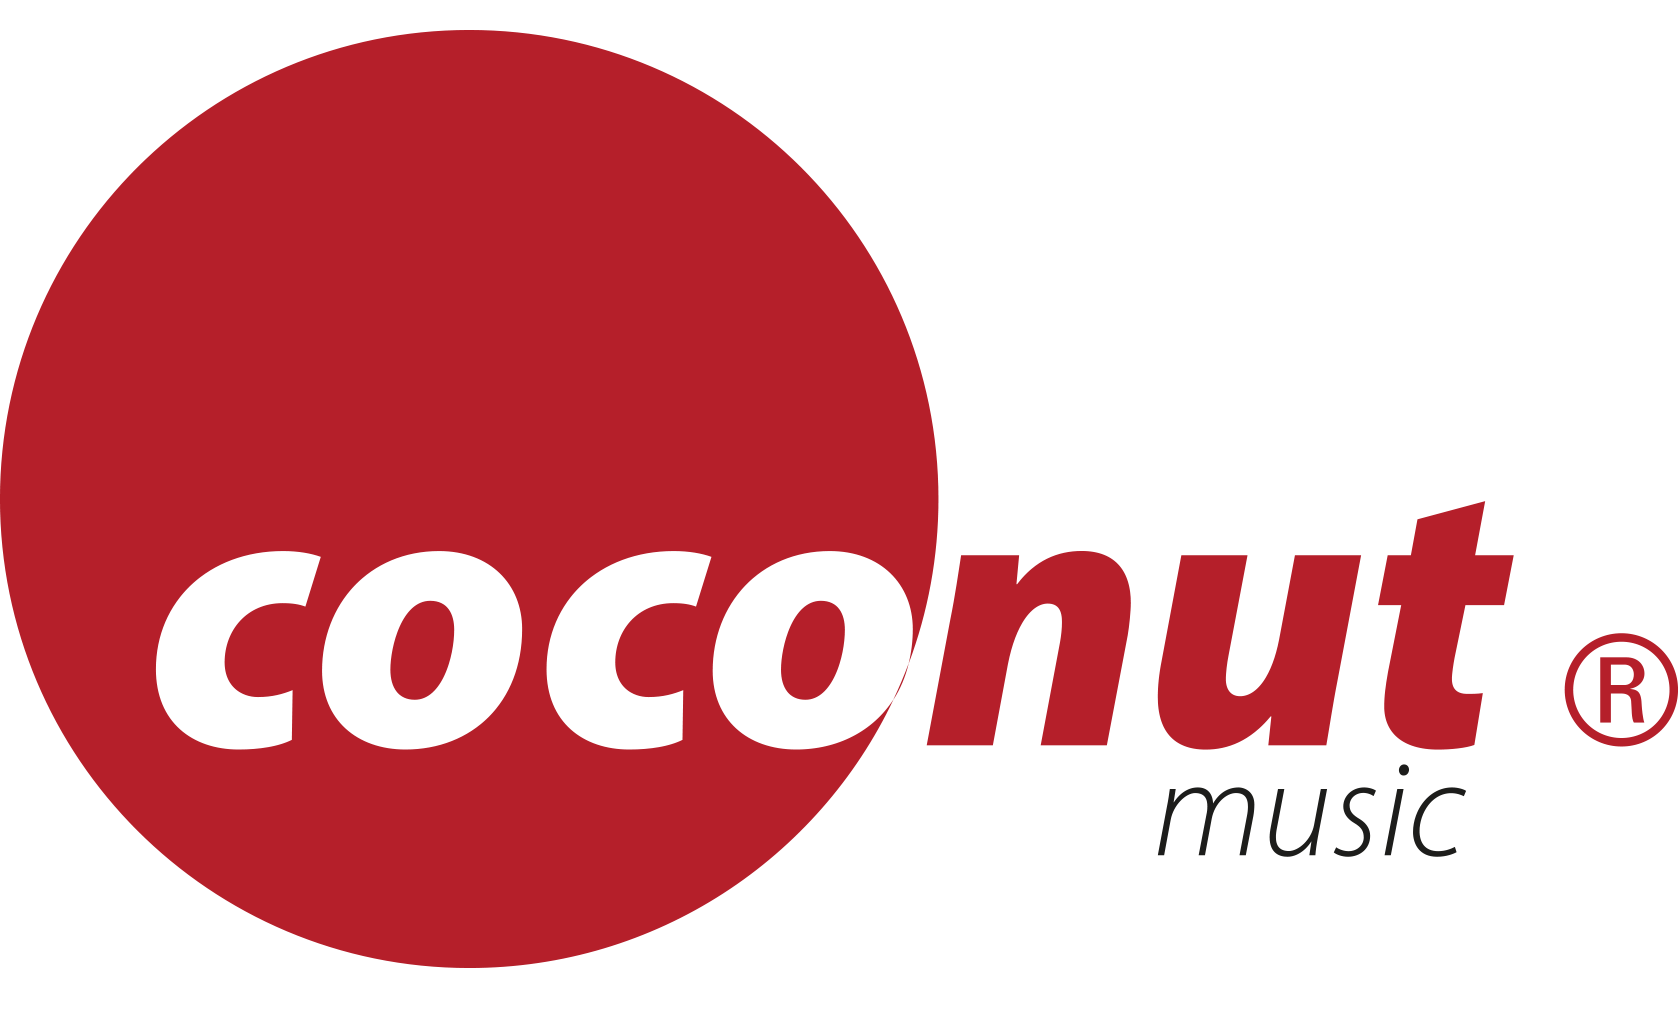 (c) Coconut-music.de